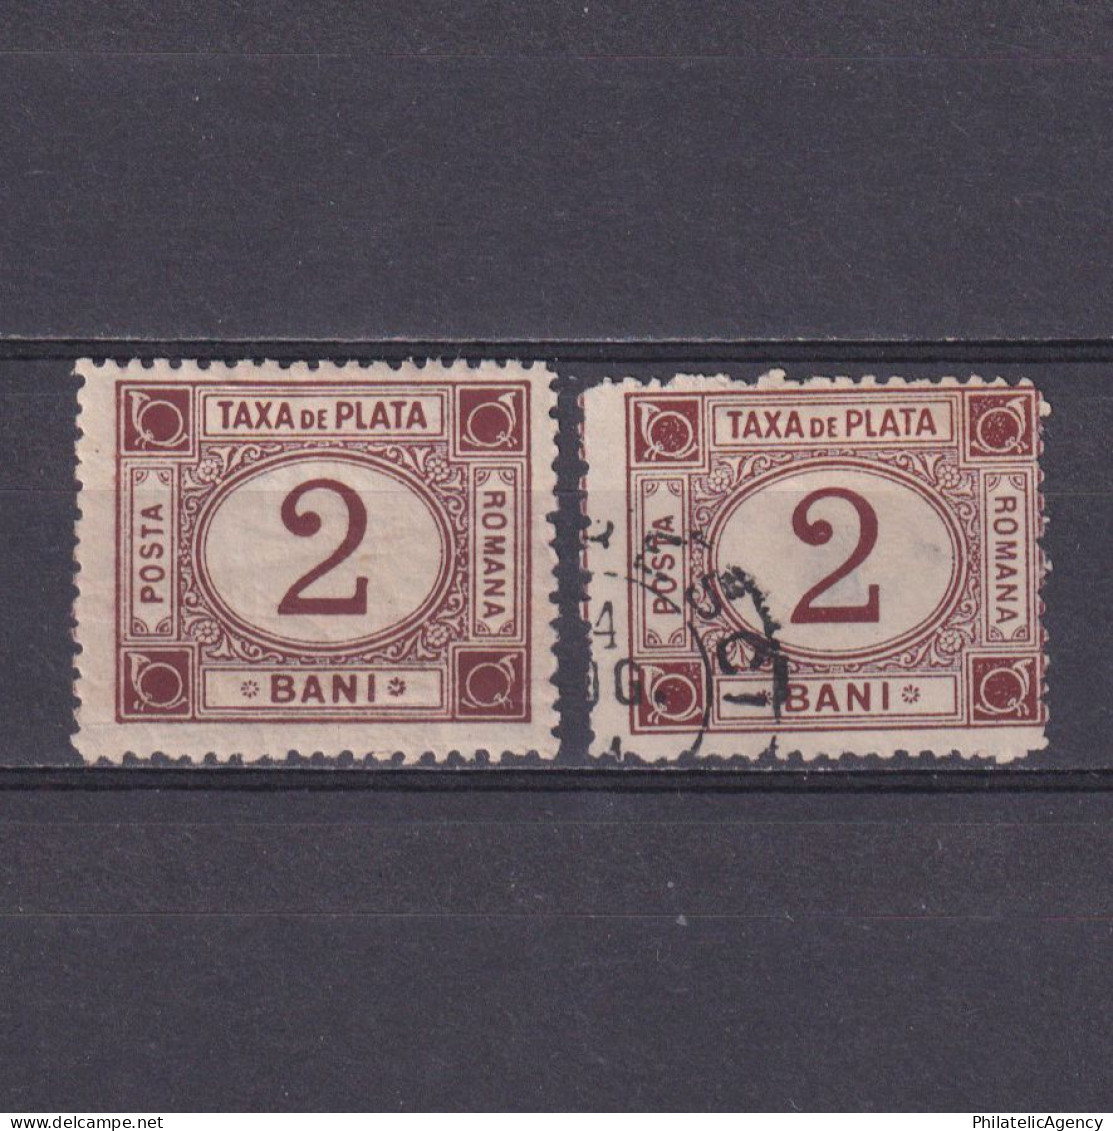 ROMANIA 1881, Sc# J1, Postage Due, MH/Used - Postage Due